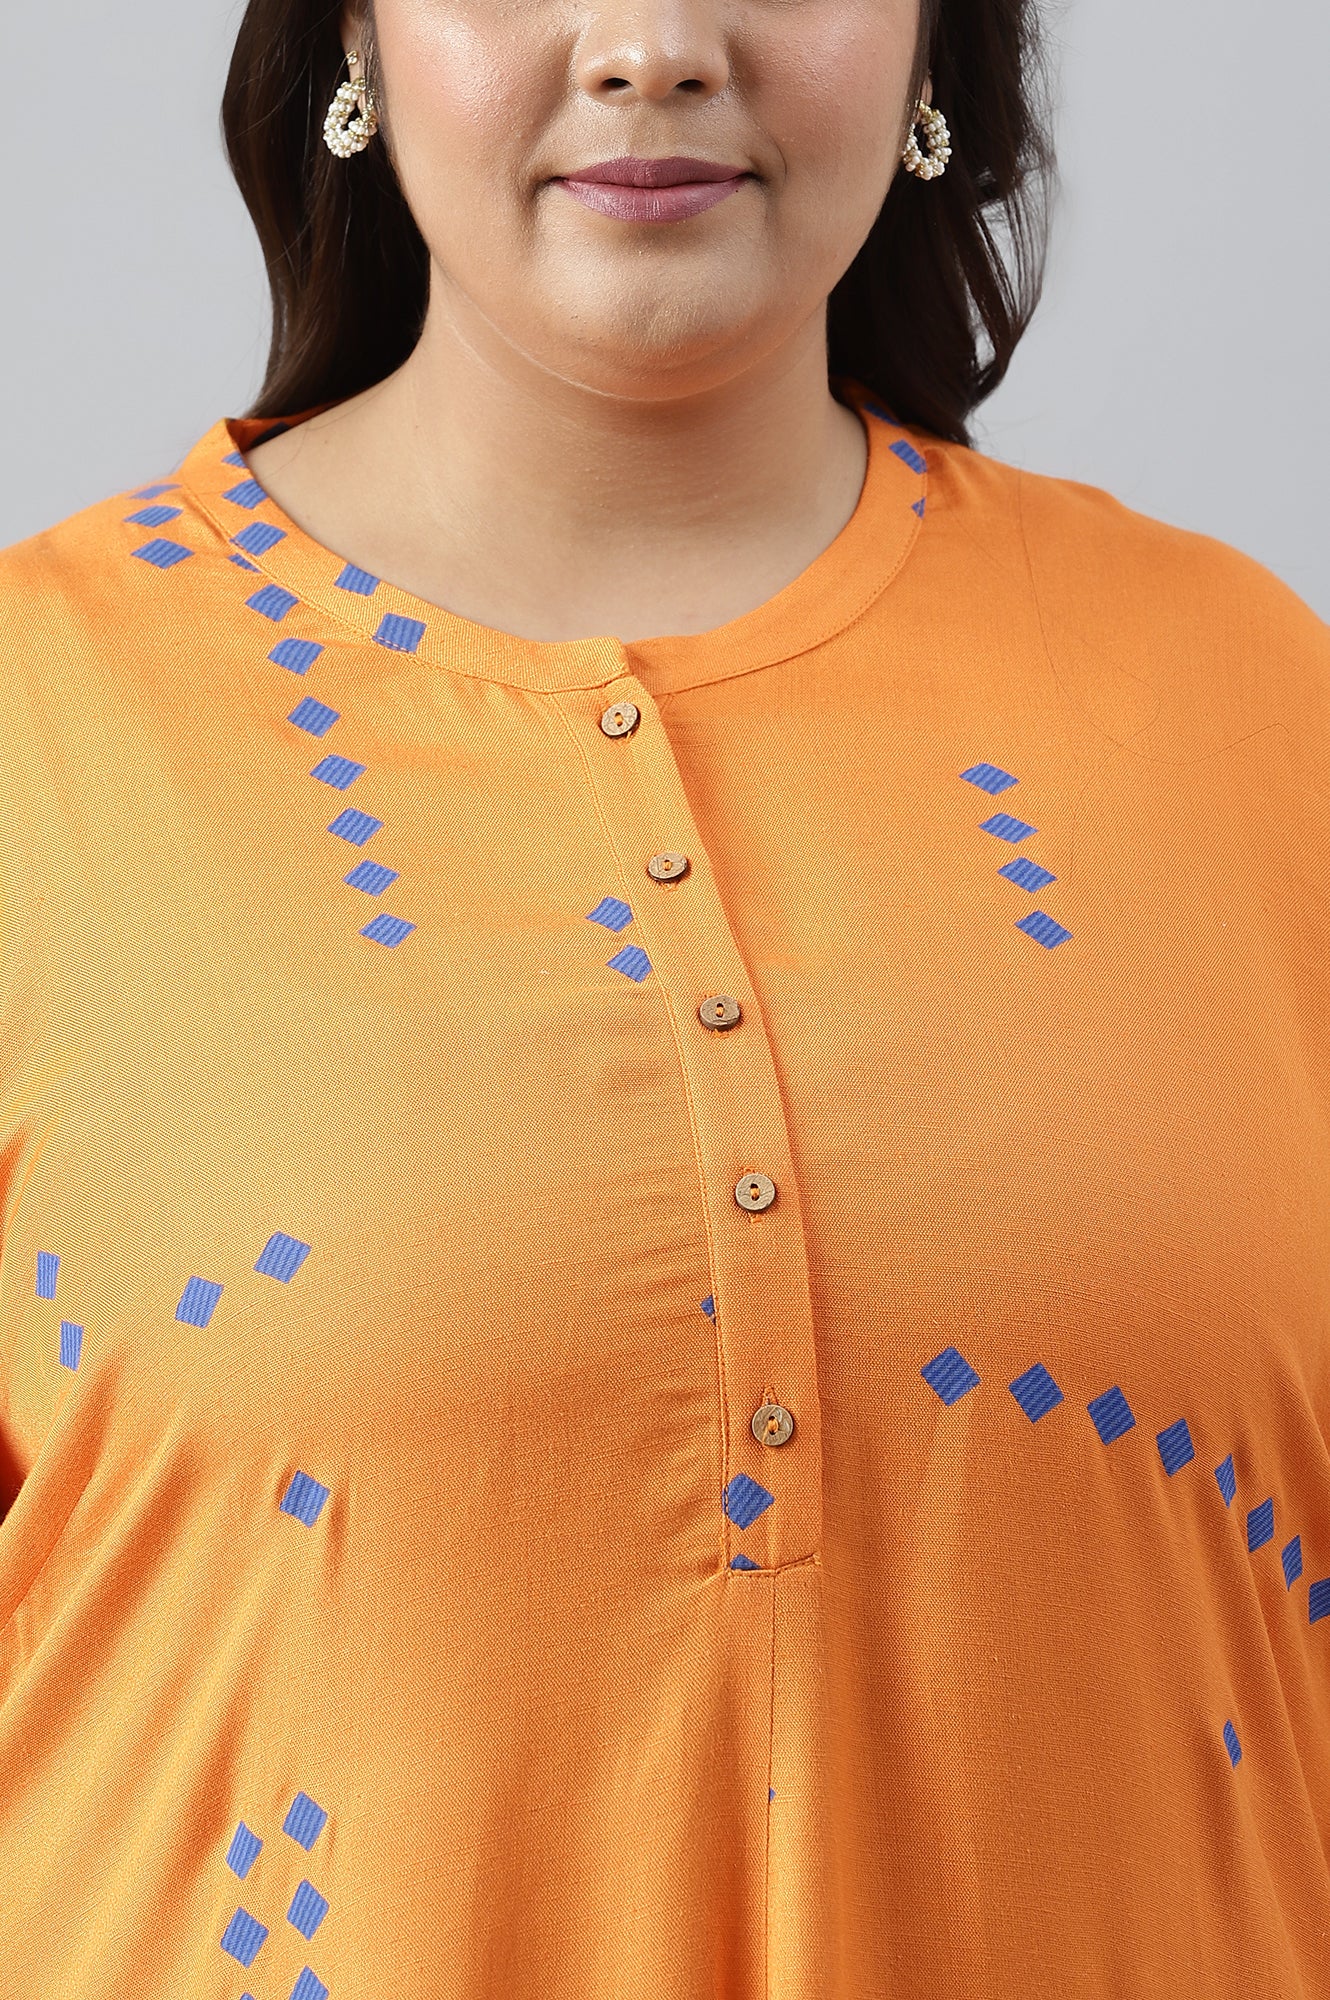 Orange Printed Asymmetrical Plus Size kurta